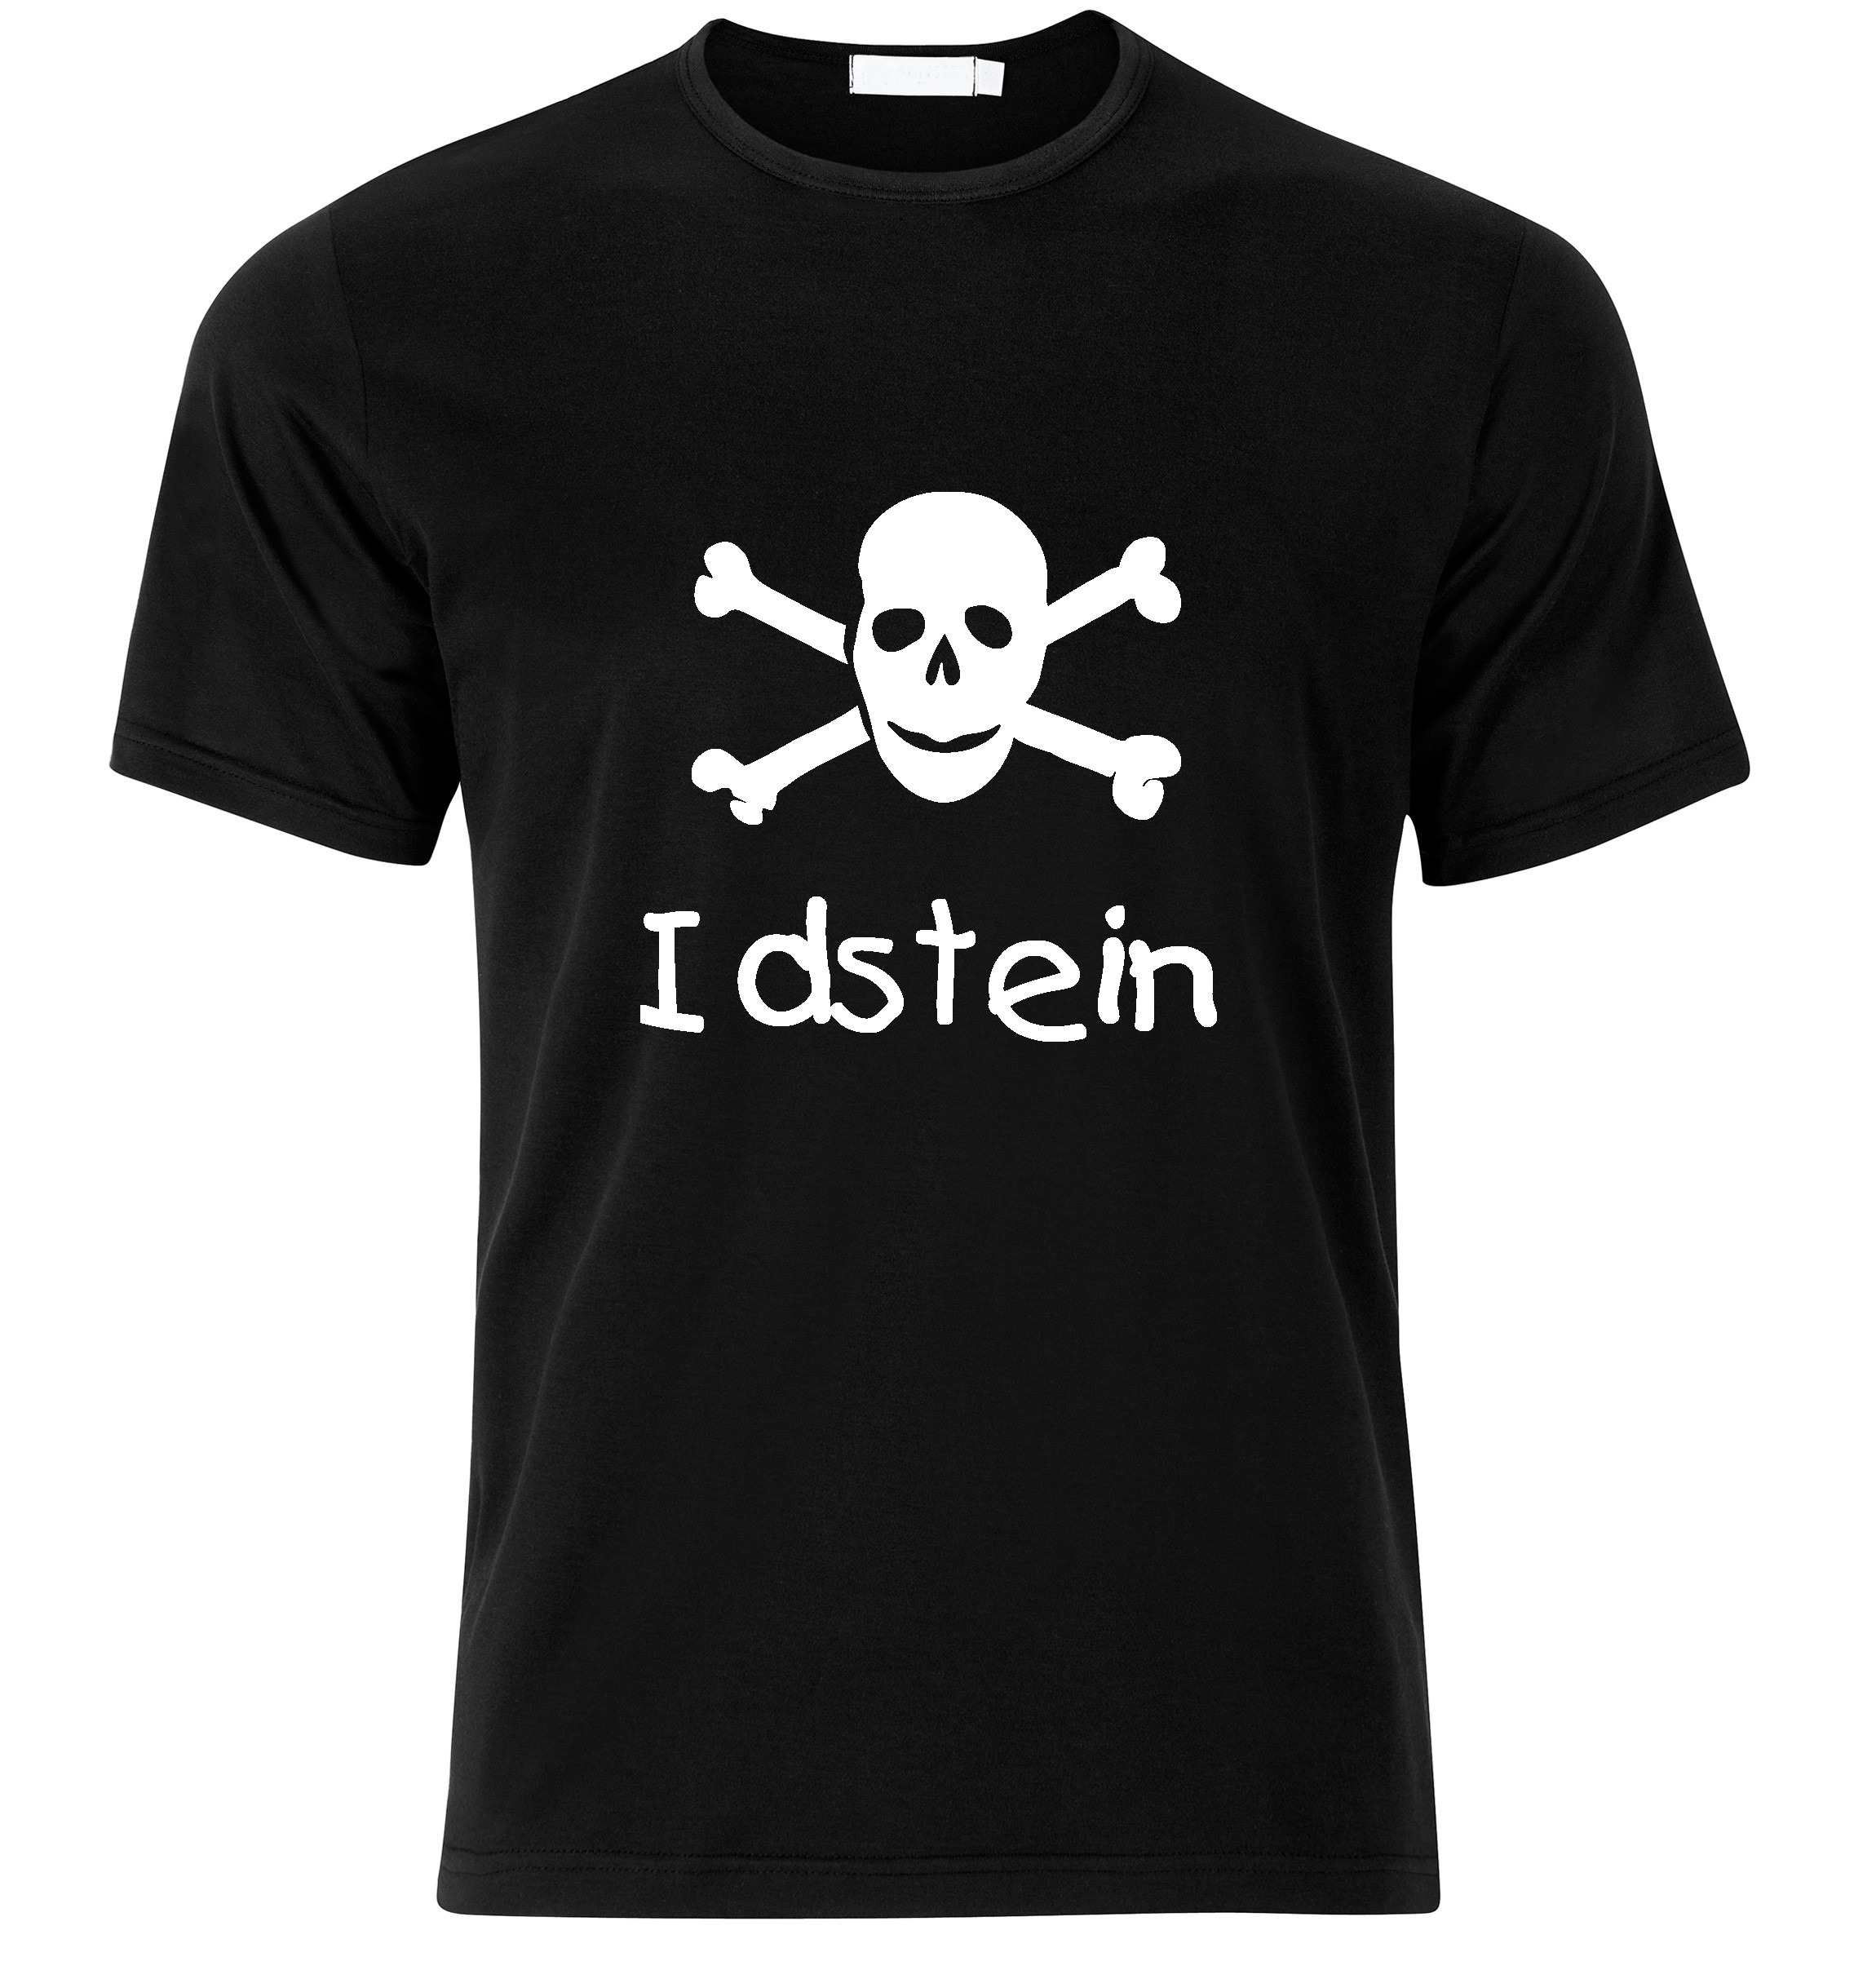 T-Shirt Idstein Jolly Roger, Totenkopf